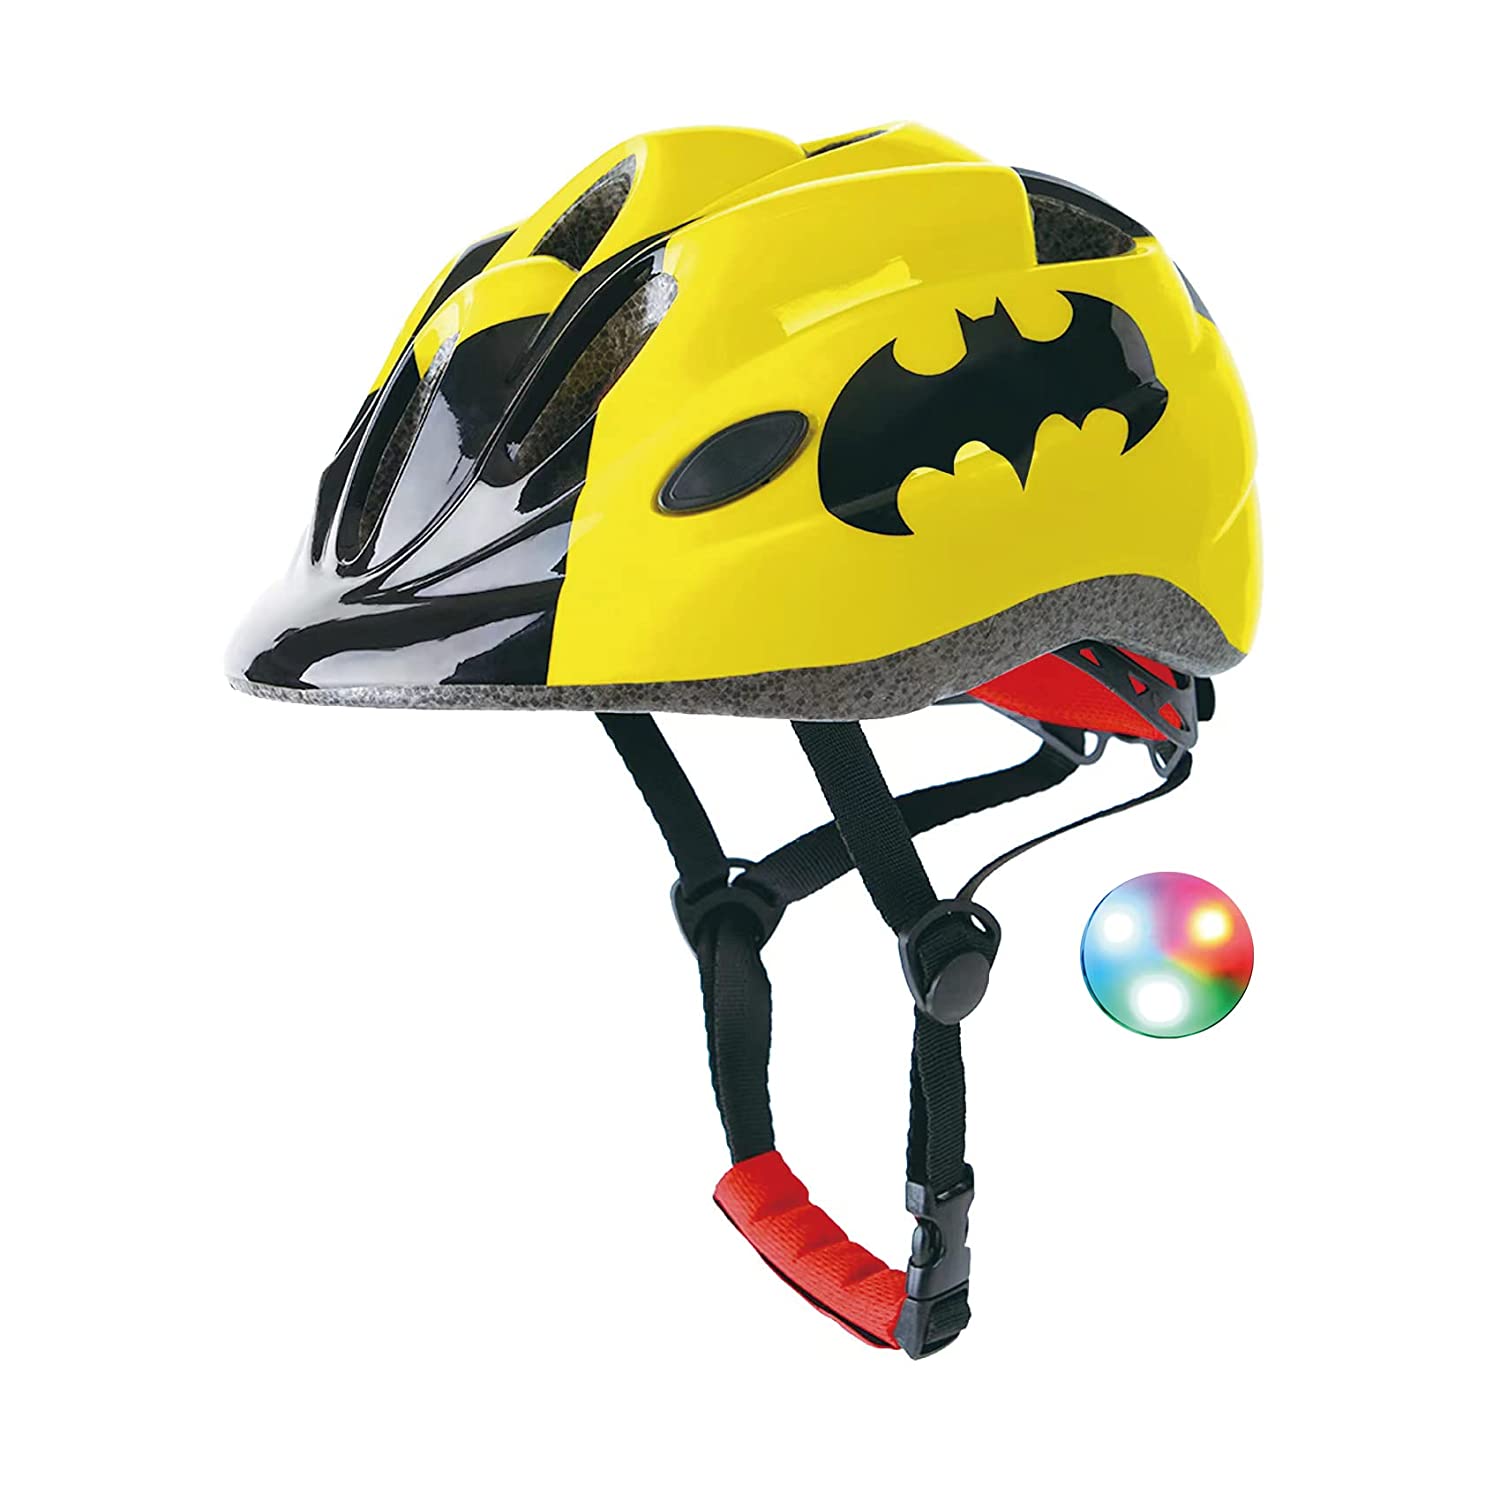 Atphfety Kids Cycling Helmet